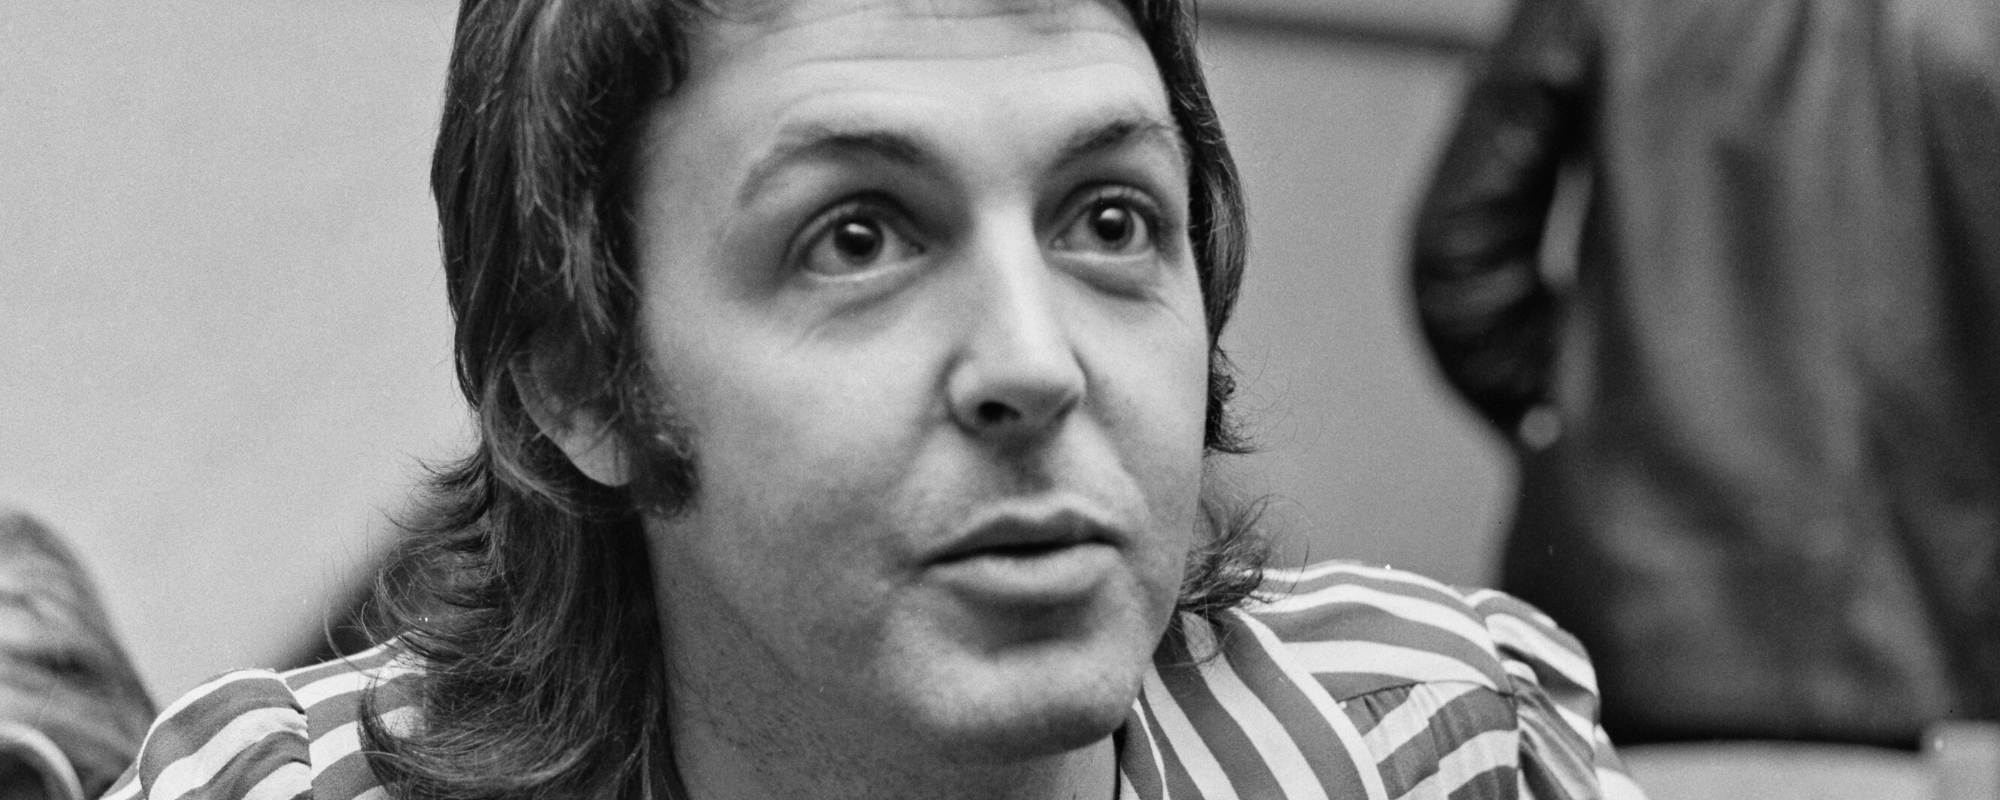 5 Songwriting Tips From Paul McCartney’s ‘The Lyrics’